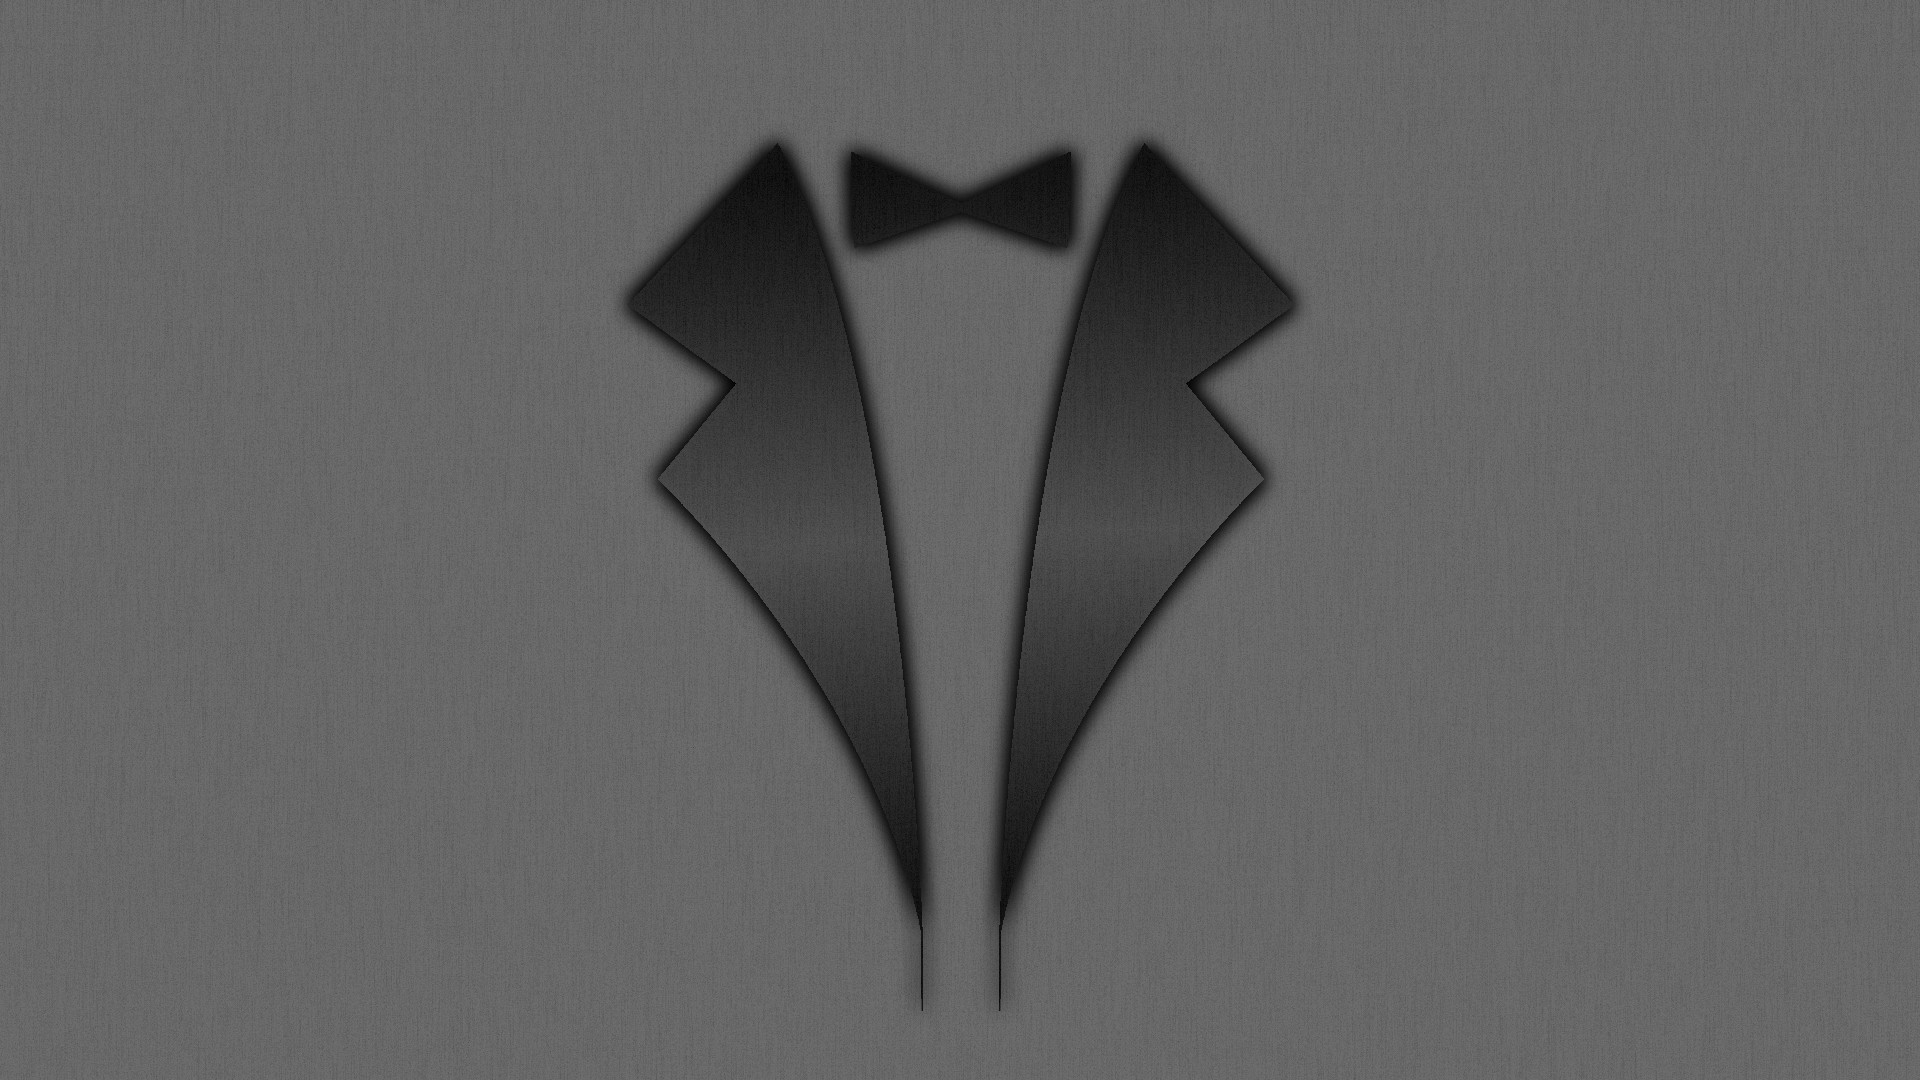 1920x1080 General  suits tuxedo bowtie shaders classy Gentleman simple  minimalism black